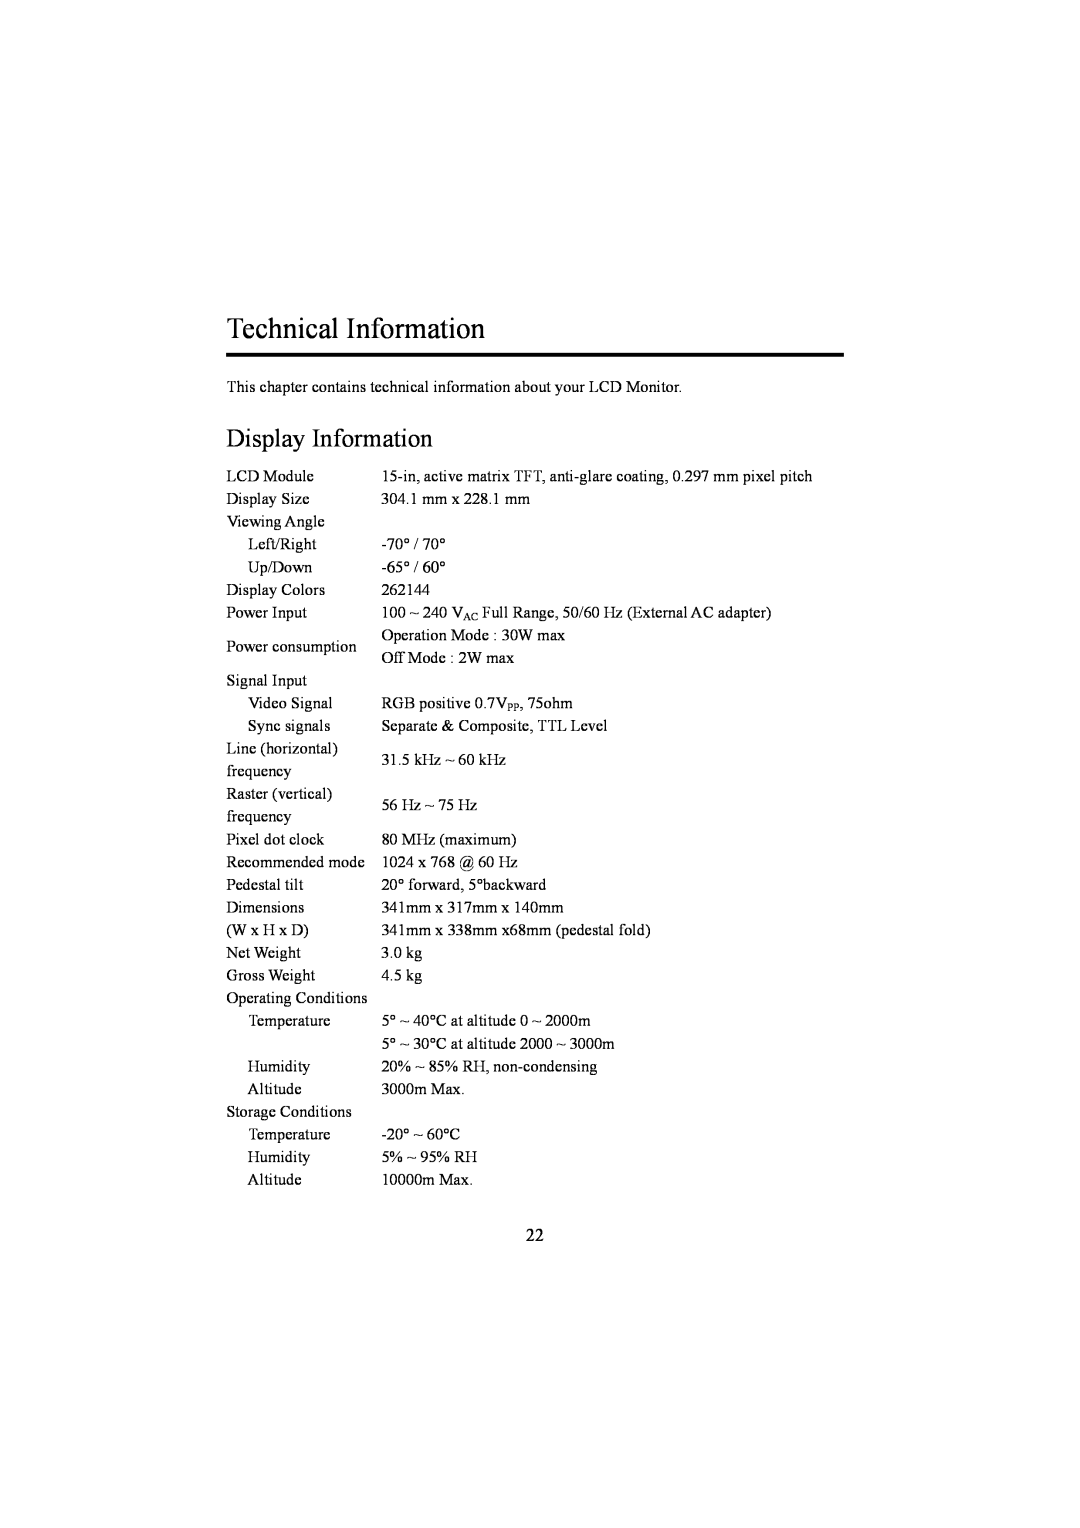 Planar PE1500 manual Technical Information, Display Information 